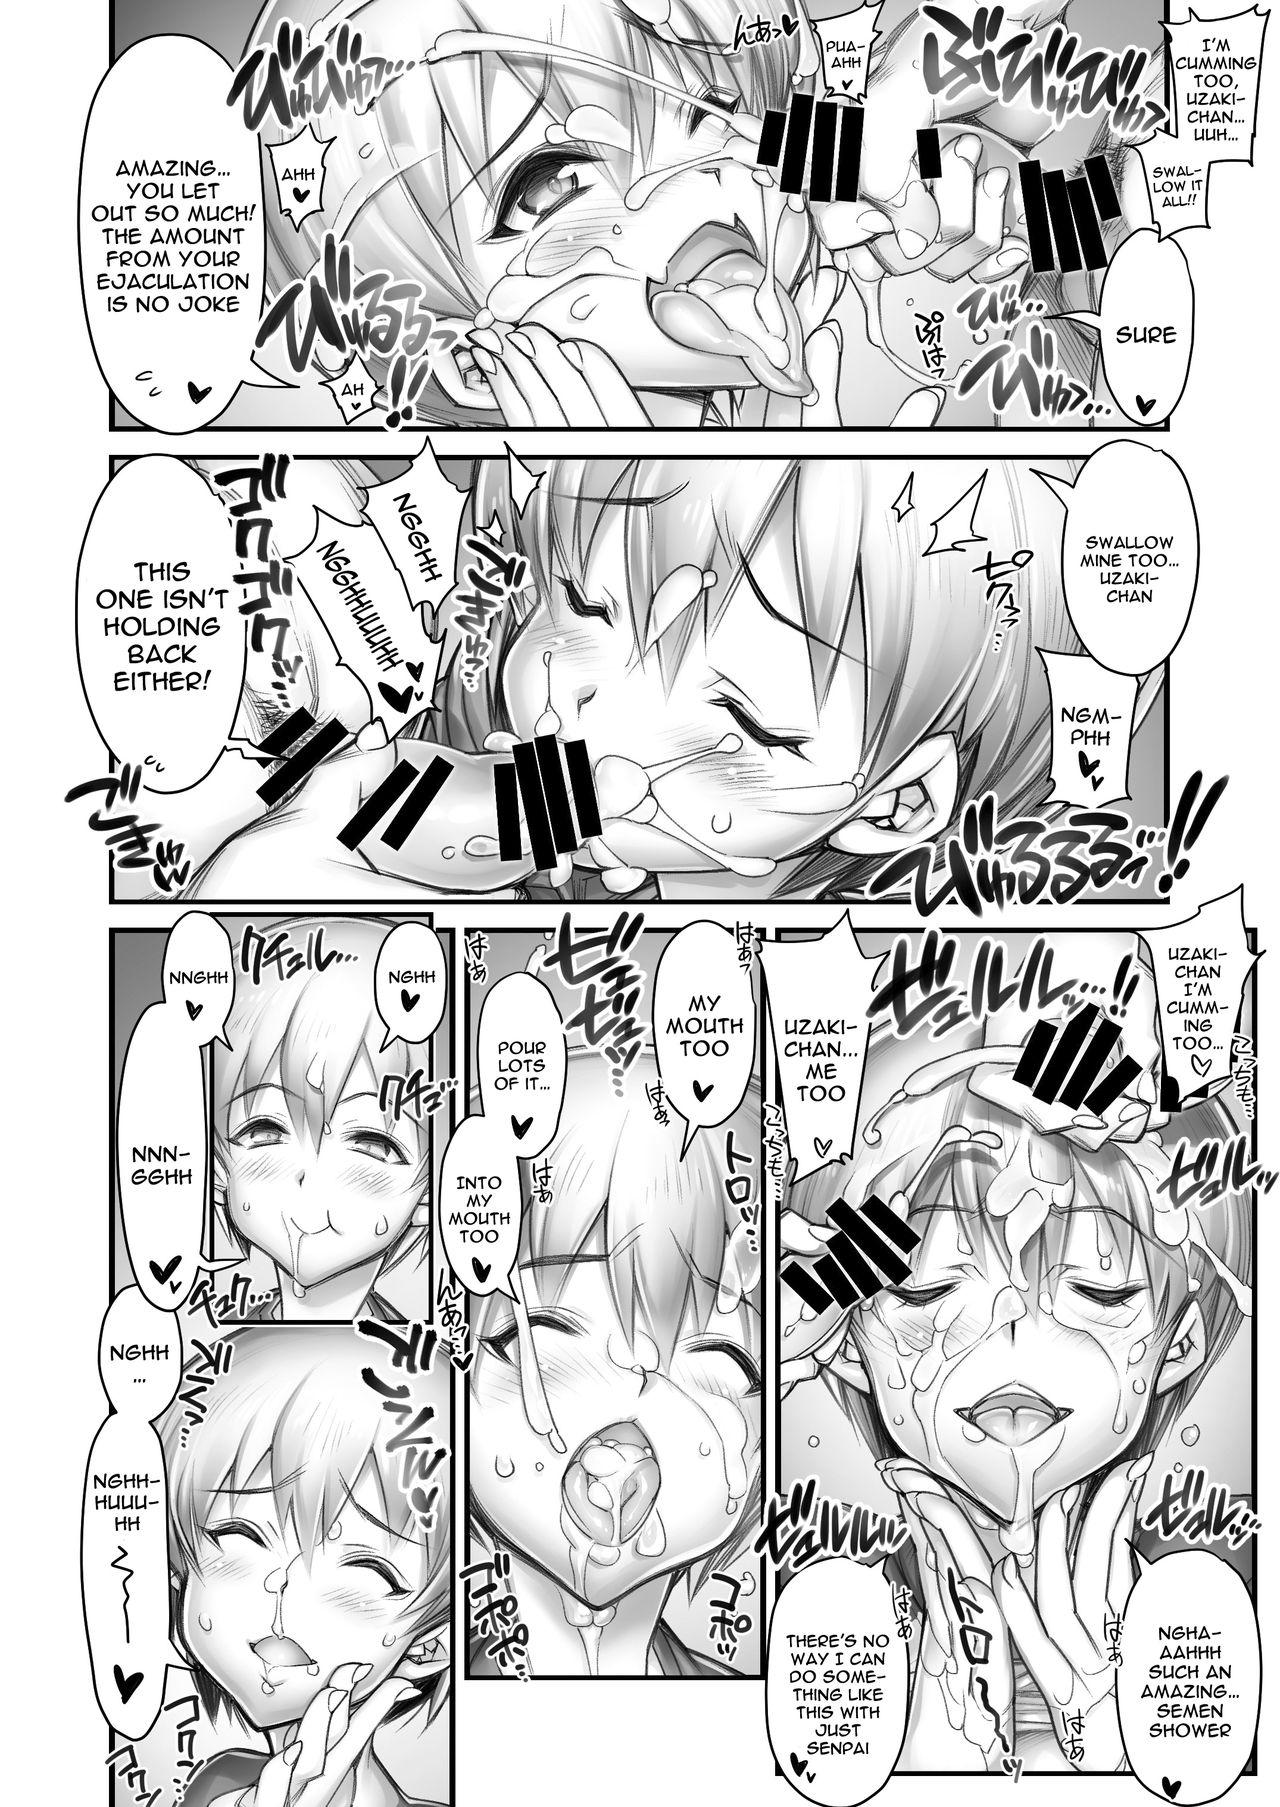 Throatfuck Uzaki-chan Wants To Message To Senpai Videos Of Her Having Sex With Lots of Men!! - Uzaki-chan wa asobitai Gay Cut - Page 8